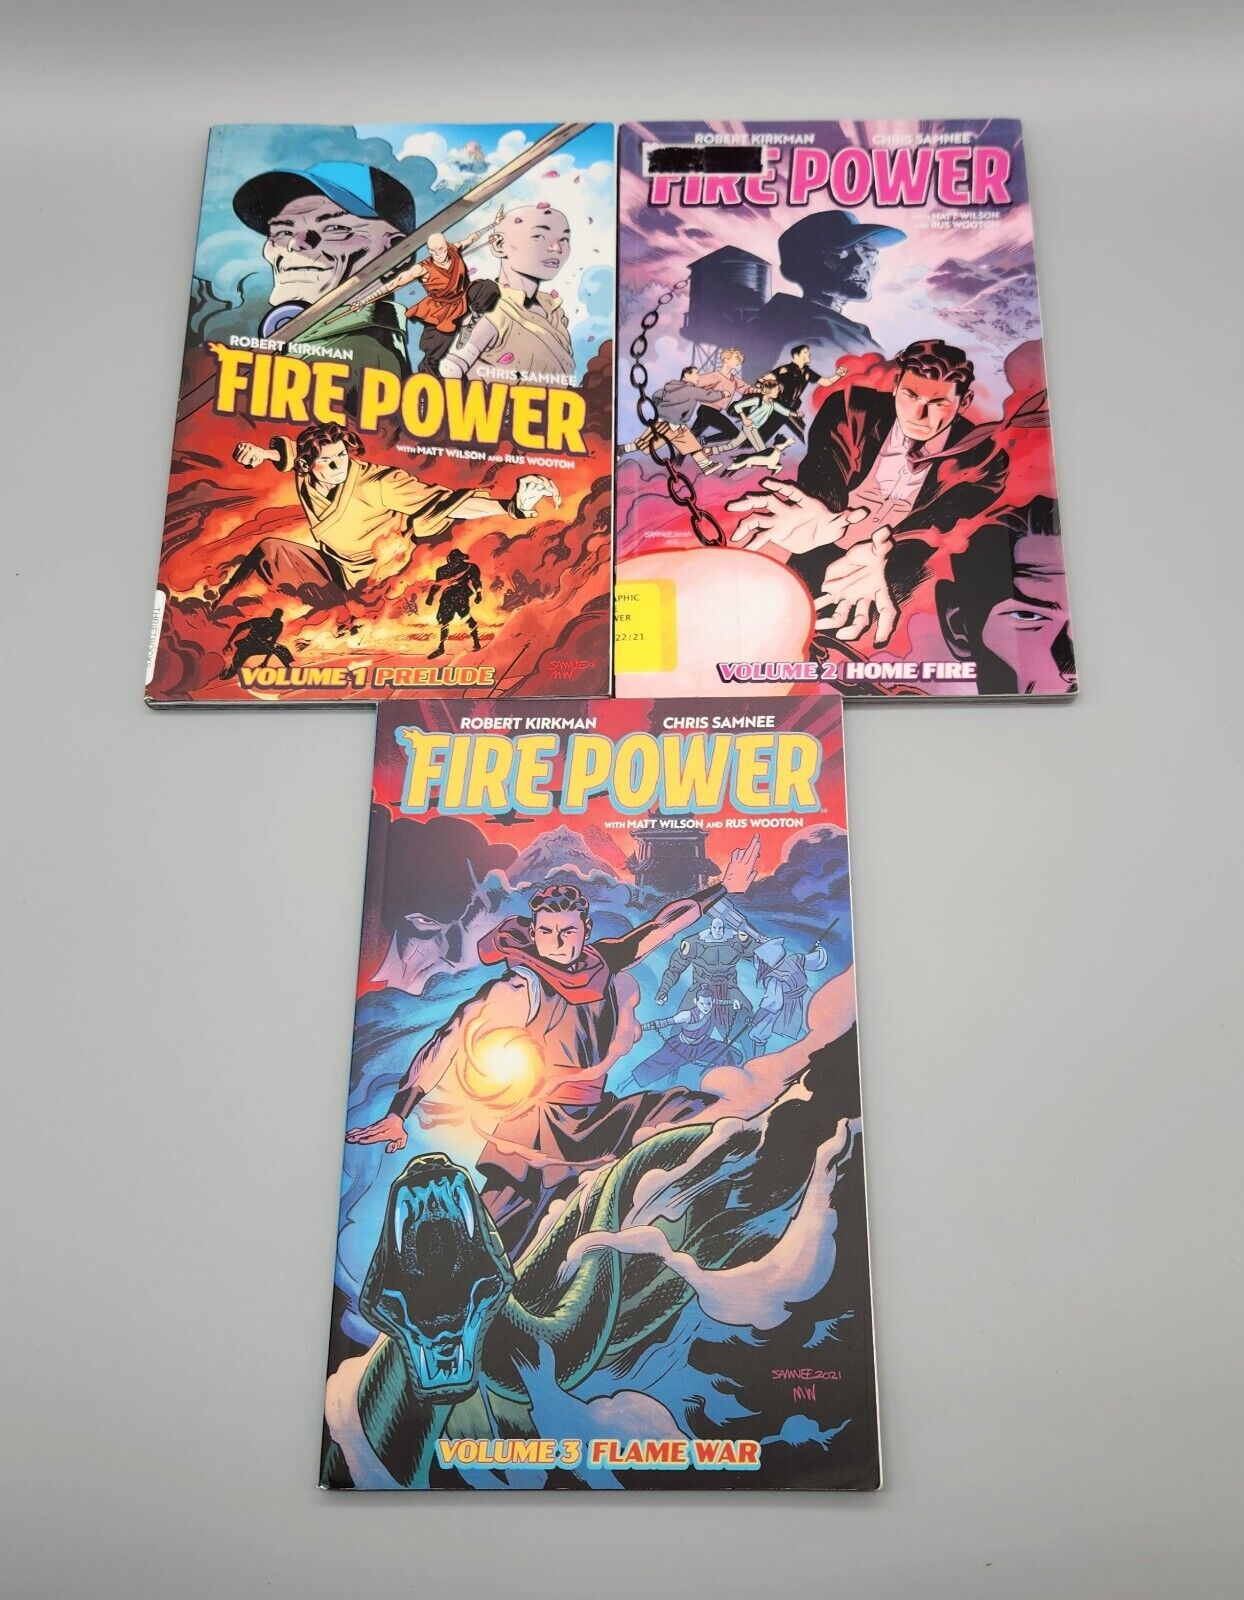 FIRE POWER Volume 1 2 3 TPB BOOK LOT Image Comics CHRIS SAMNEE Robert Kirkman